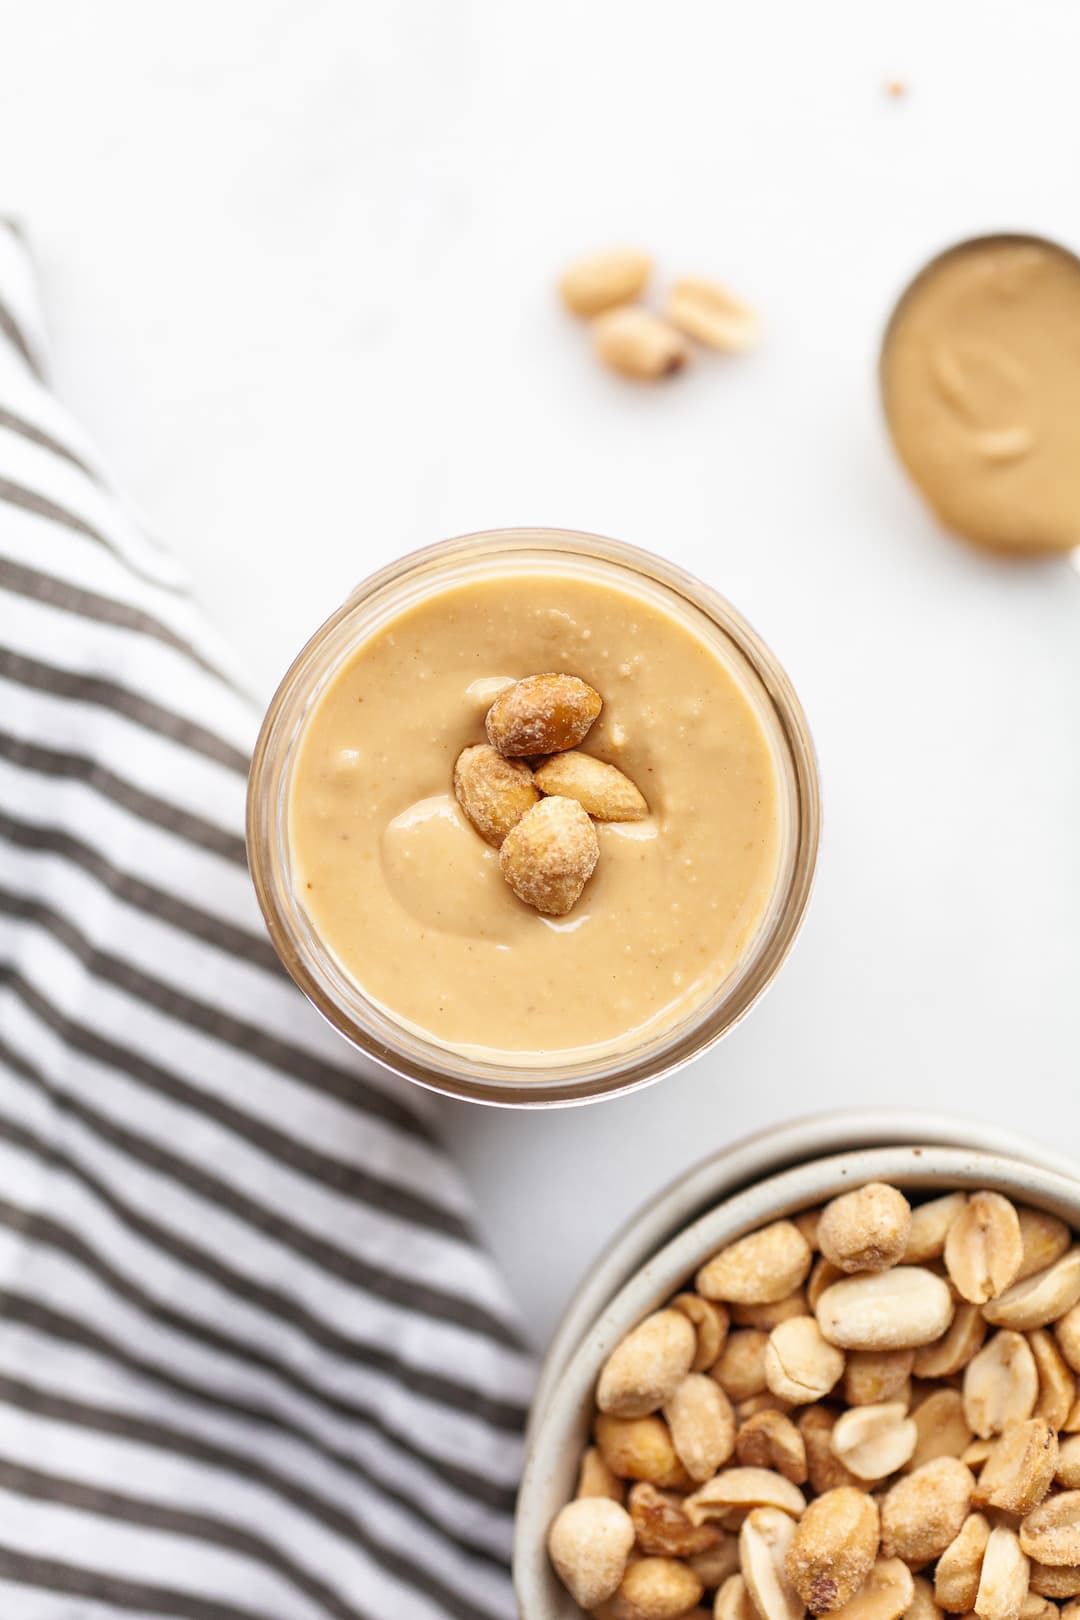 Tasty and Simple 2-Minute Vitamix Peanut Butter